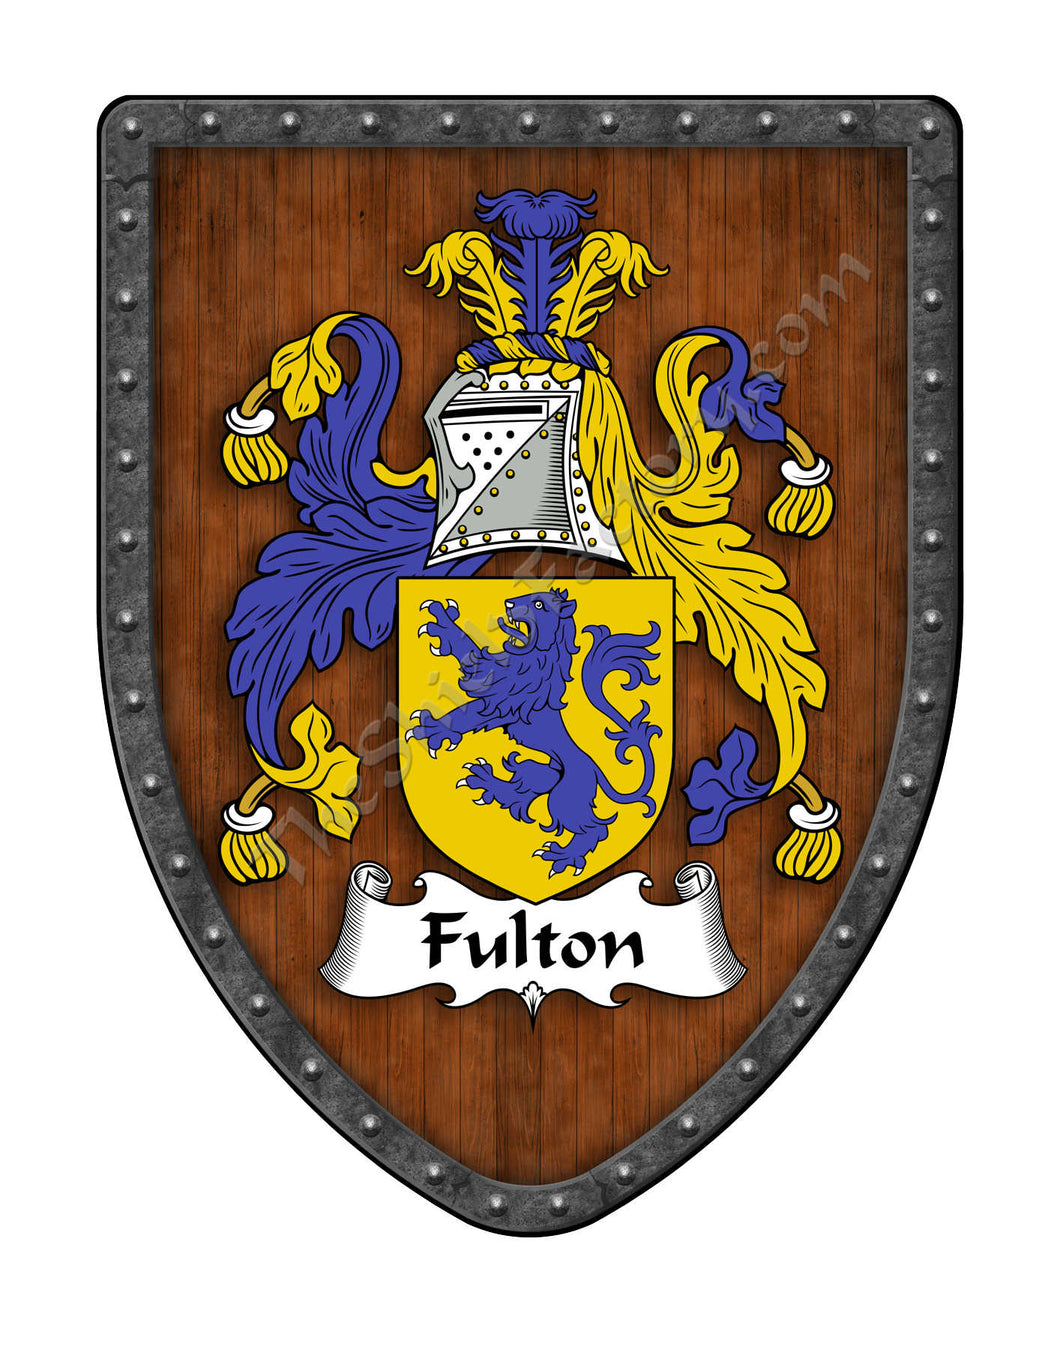 Fulton Coat of Arms Shield